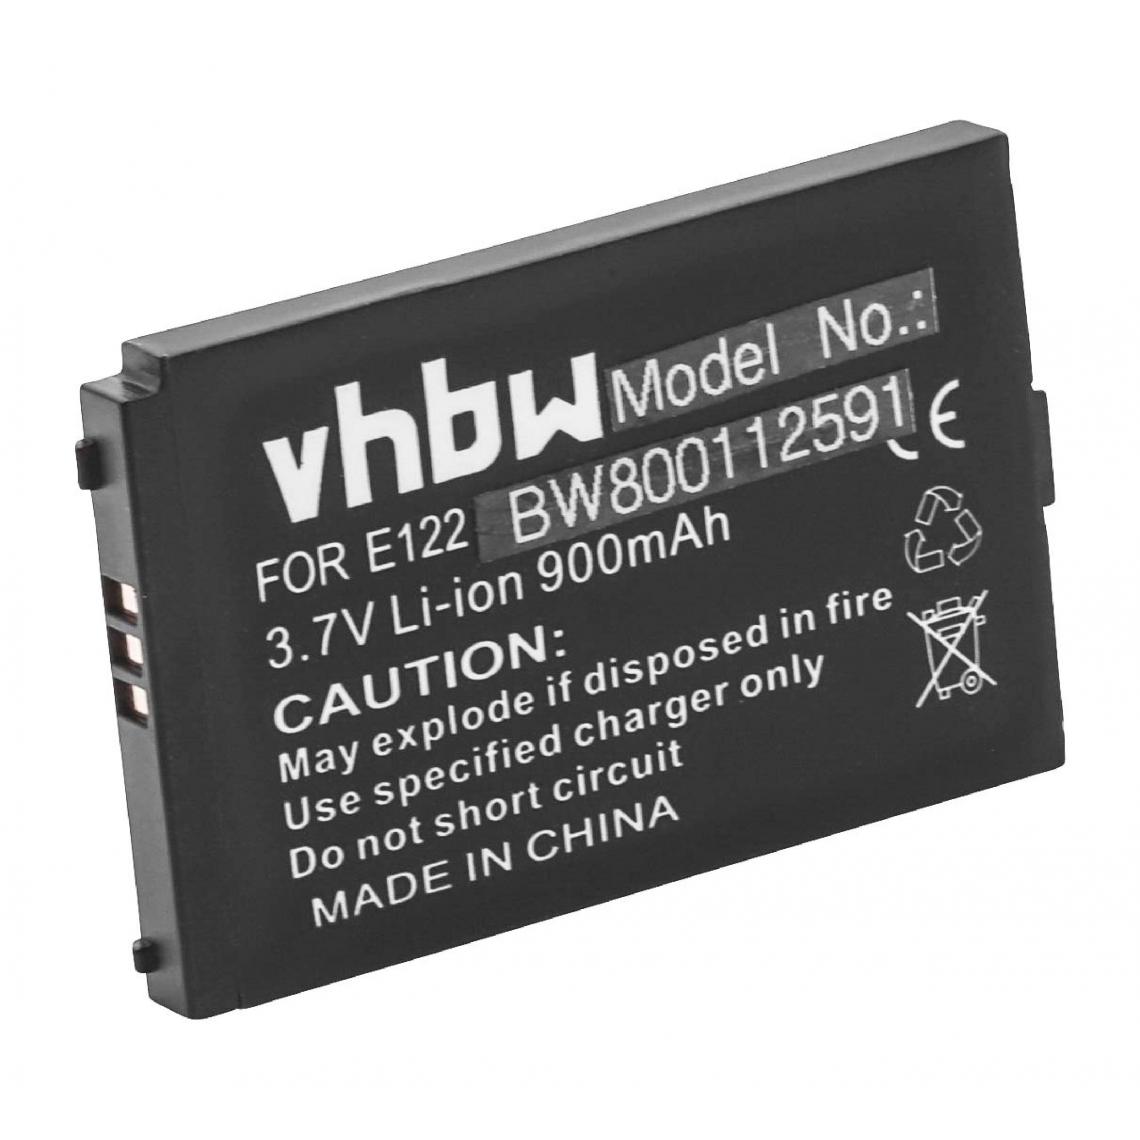 Vhbw - vhbw Li-Ion Batterie 900mAh (3.7V) pour téléphone Smartphone Medion MD2201, MD97100, MD97200, Telecom Italia Aladino Flip, Slide comme LP043450A. - Batterie téléphone